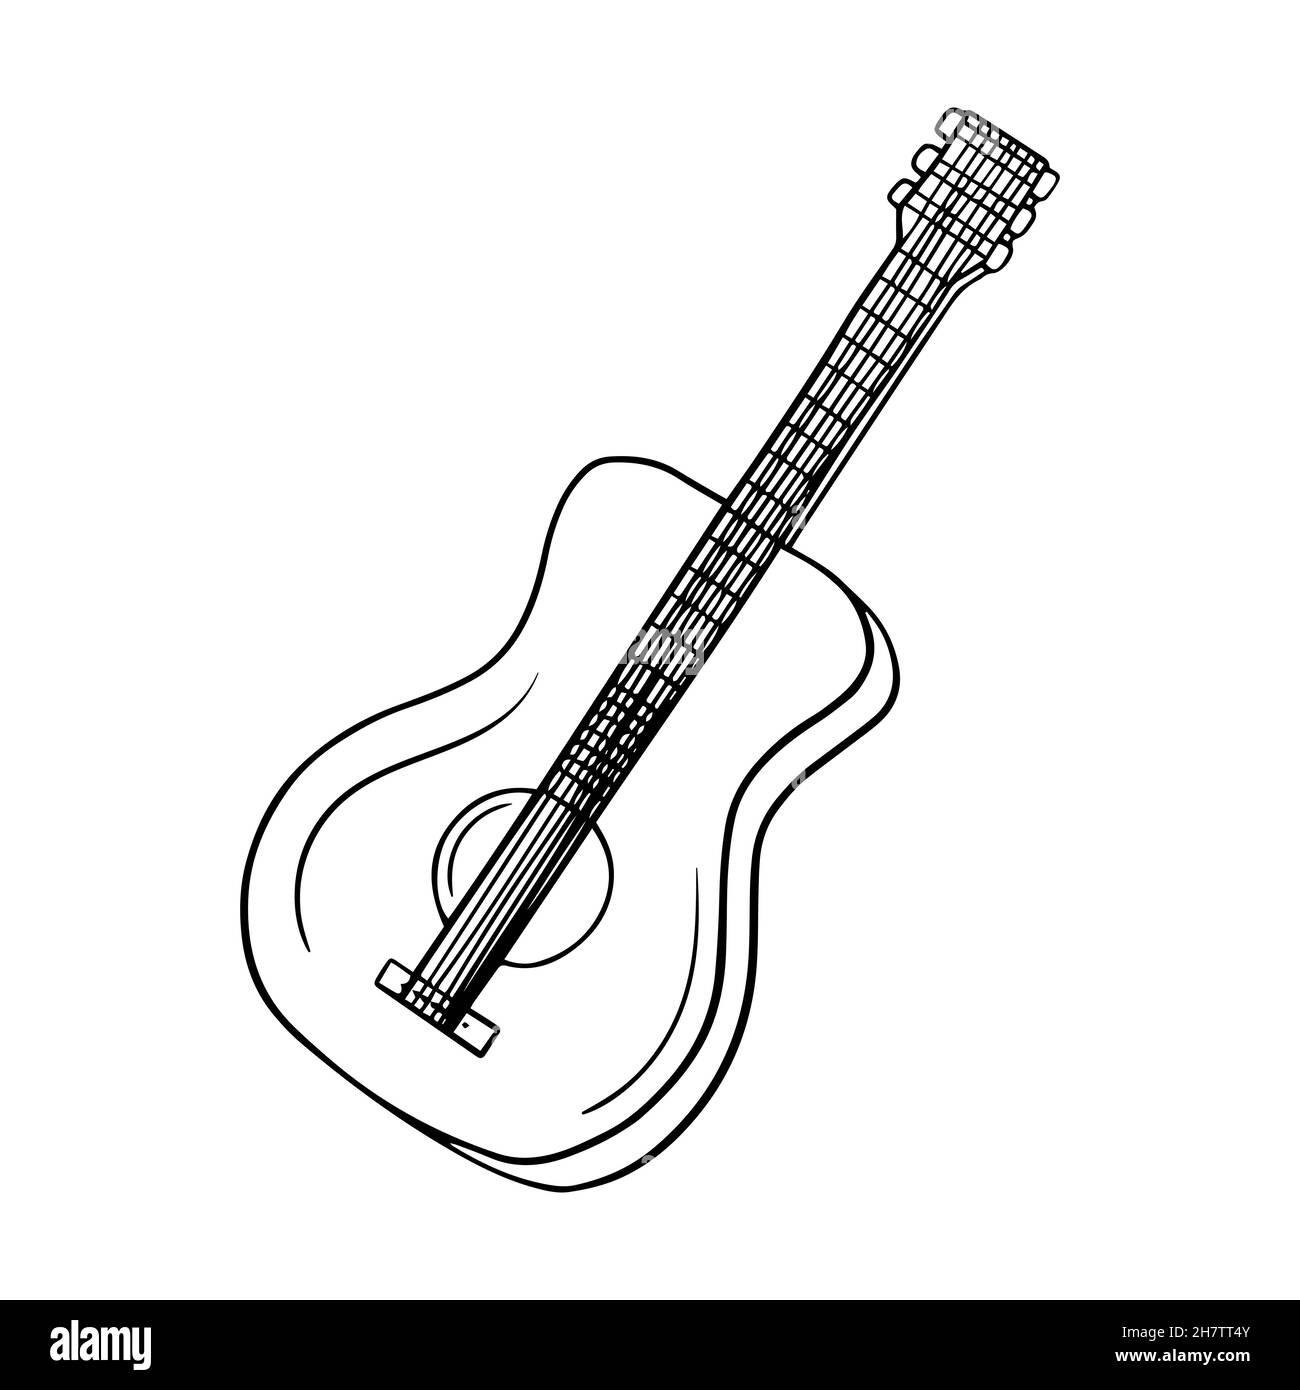 Gitarre Vektor-Symbol, Doodle Skizze Zeichnung, Tourismus und Erholung  Stock-Vektorgrafik - Alamy